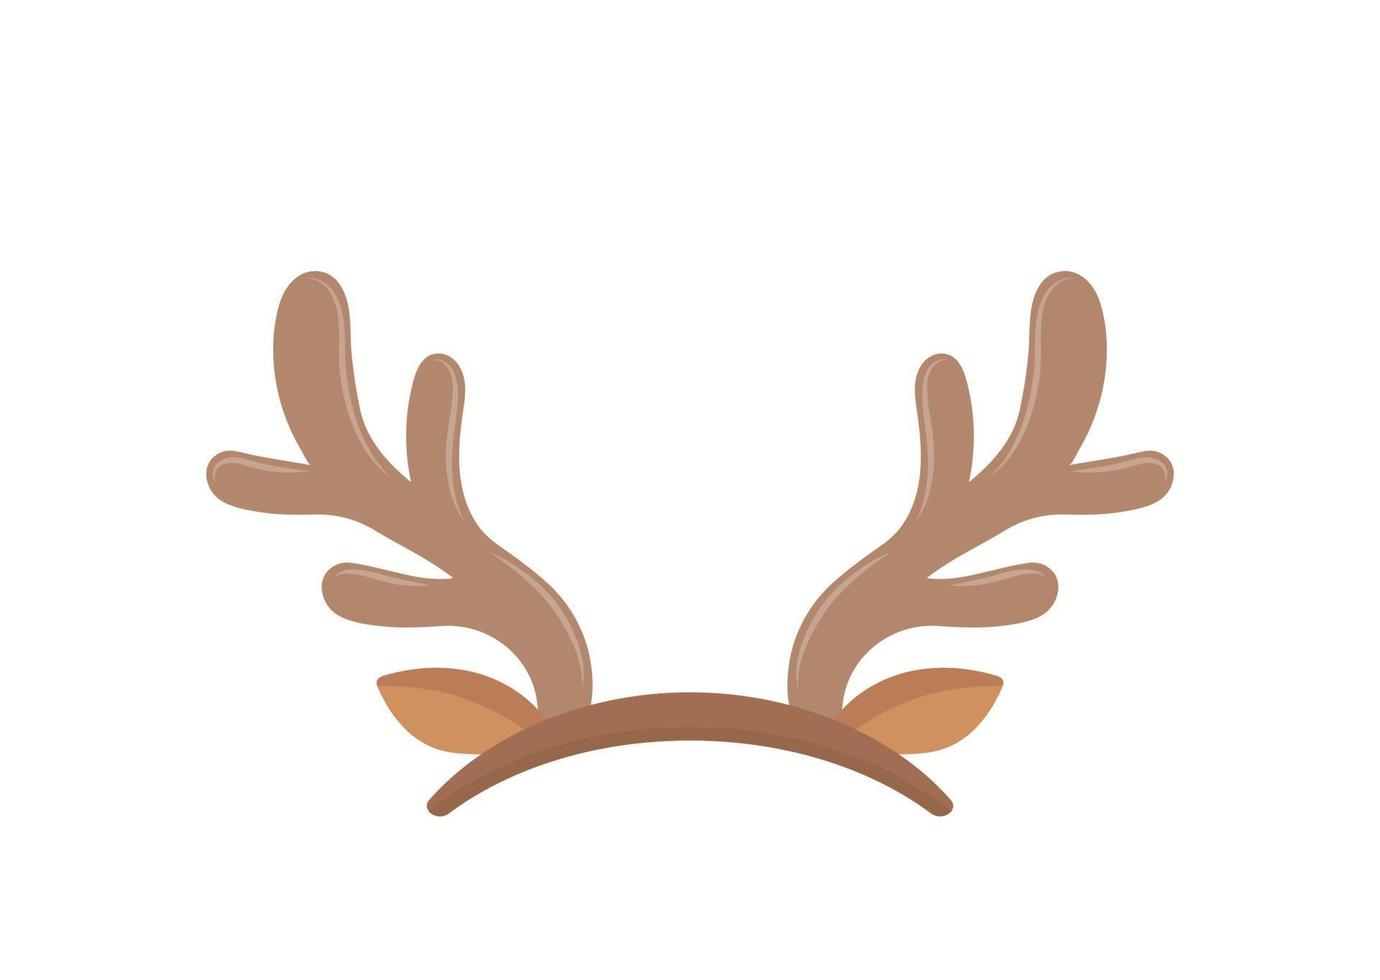 Antlers of elk or reindeer, christmas element, headband with antlers, vector cartoon style, symbol icon illustration